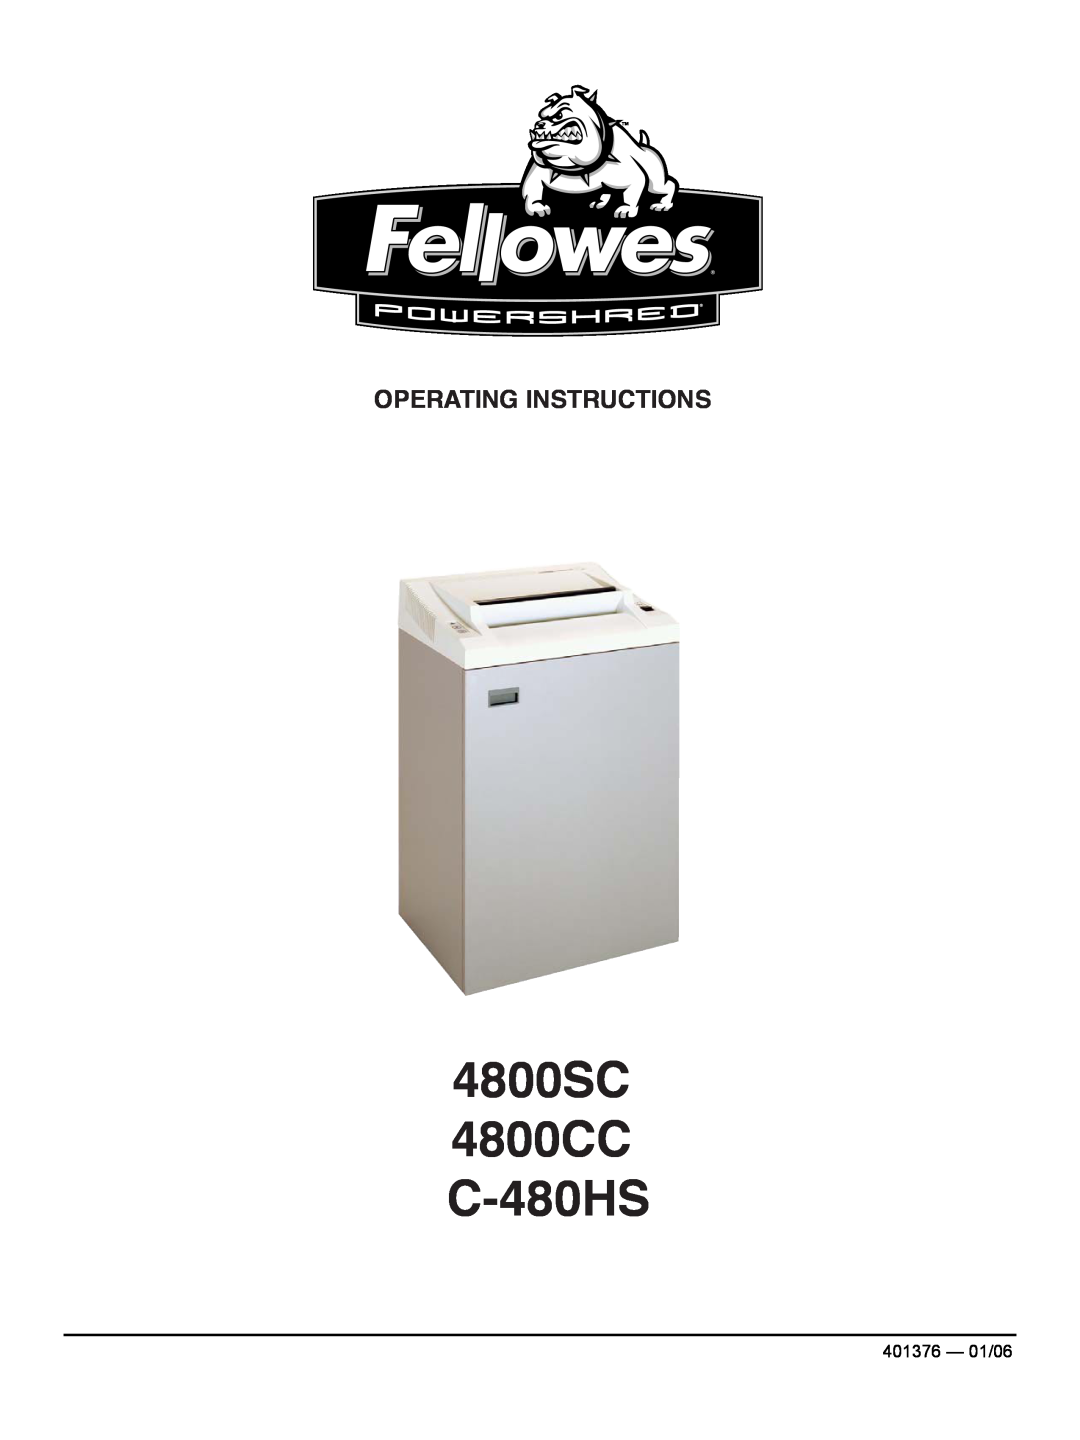 Fellowes manual 4800SC 4800CC C-480HS, Operating Instructions Notice Dutilisation Manual Del Propietario 